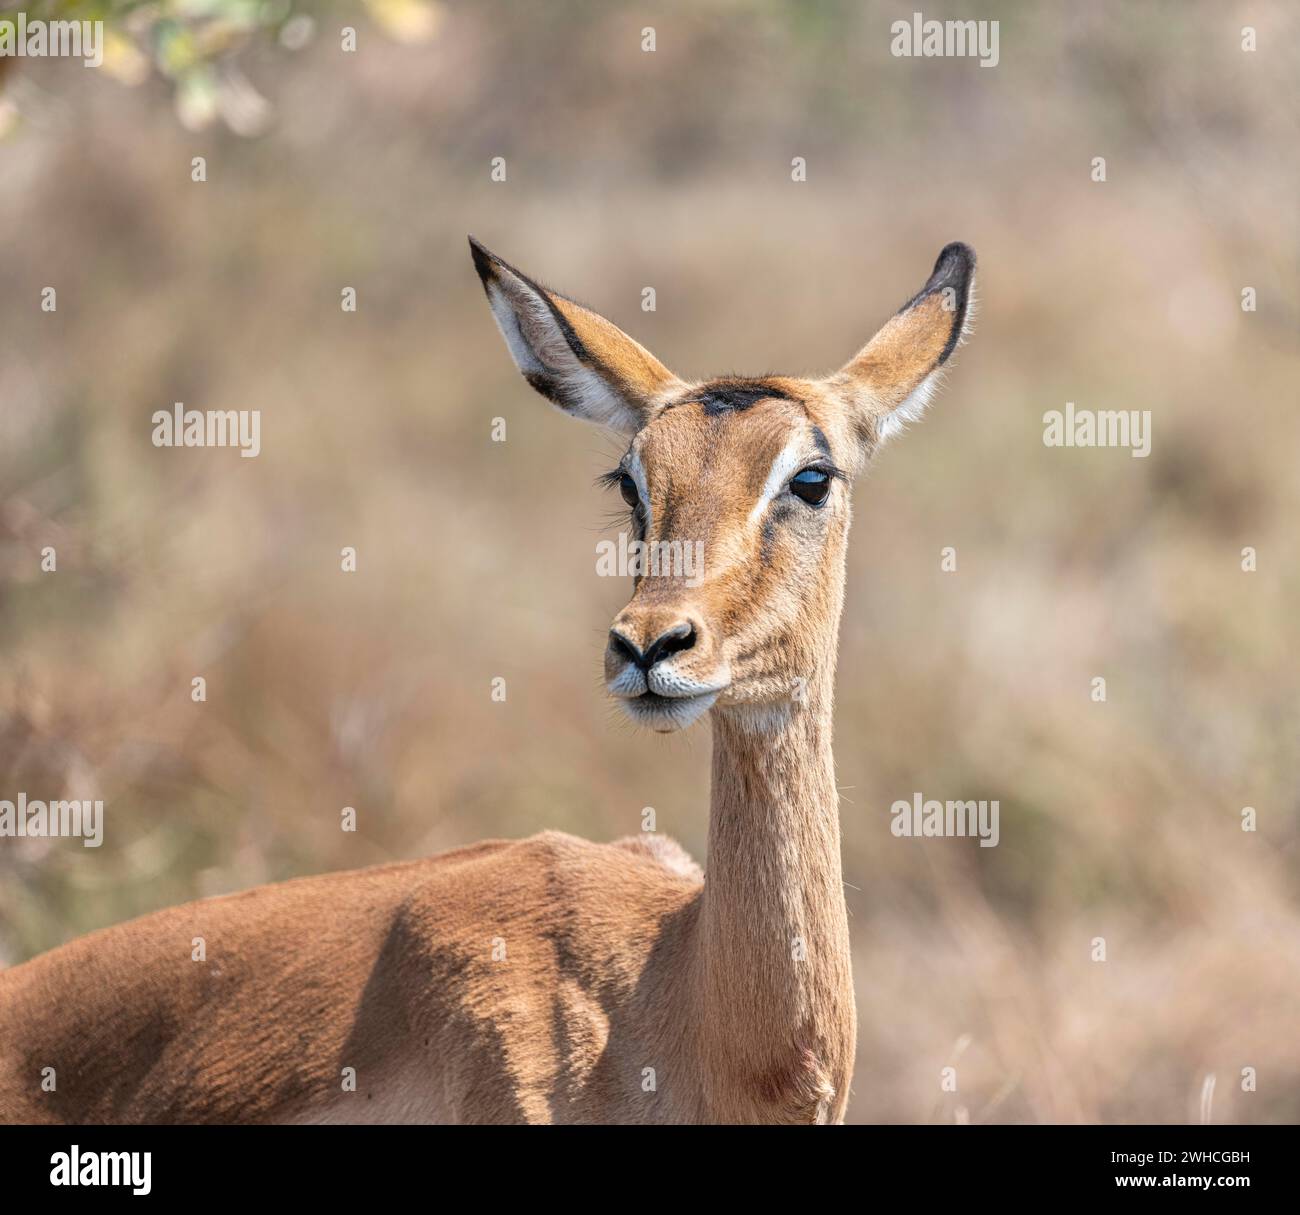 Impala (Aepyceros melampus), schwarze fersenantilope, weiblich, Tierporträt, Kruger-Nationalpark, Südafrika Stockfoto